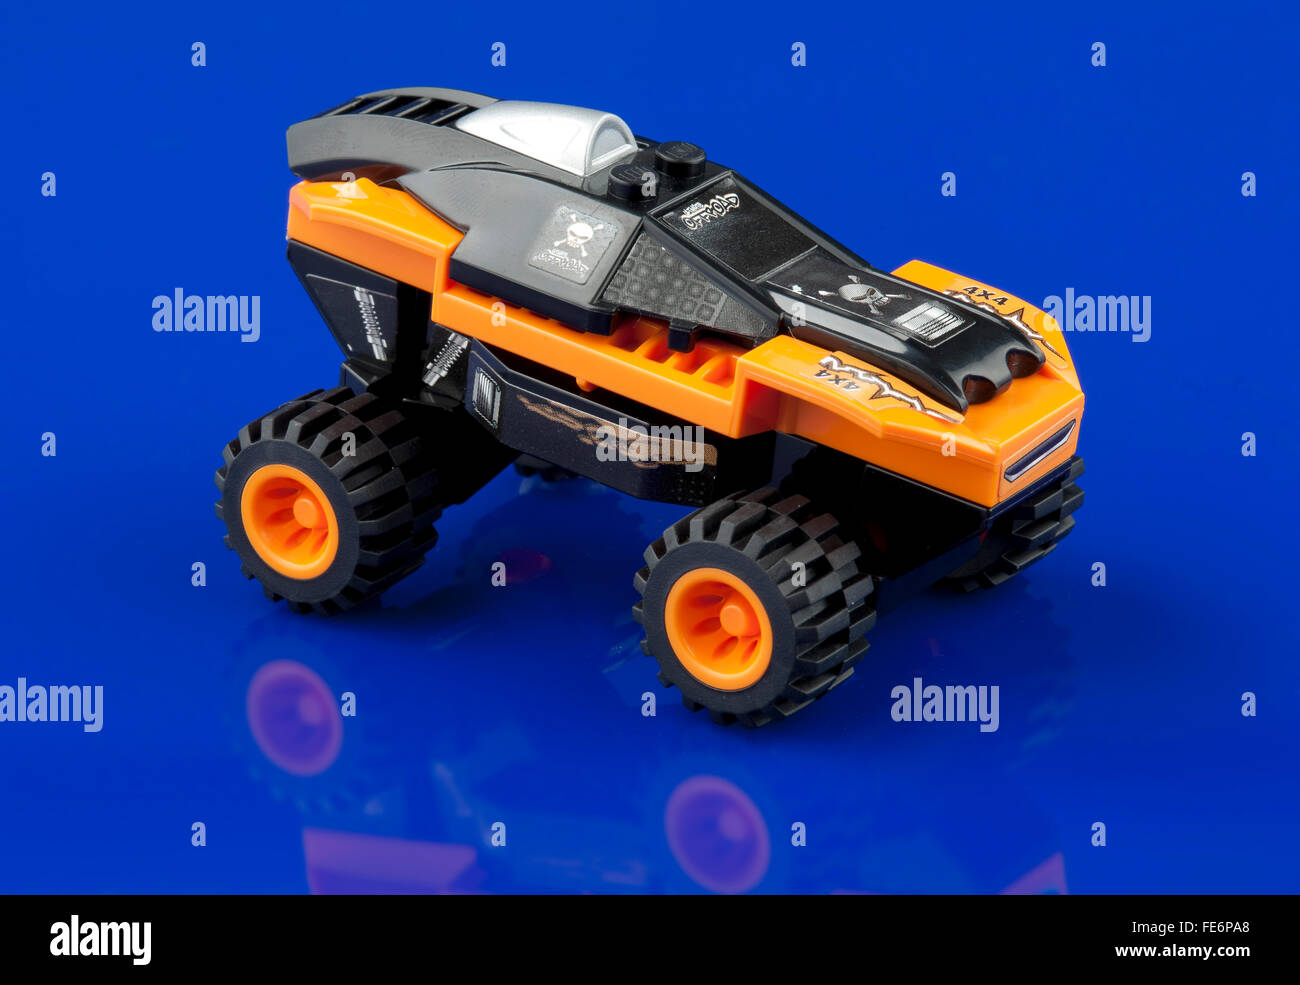 Lego racer toy car on blue background Stock Photo